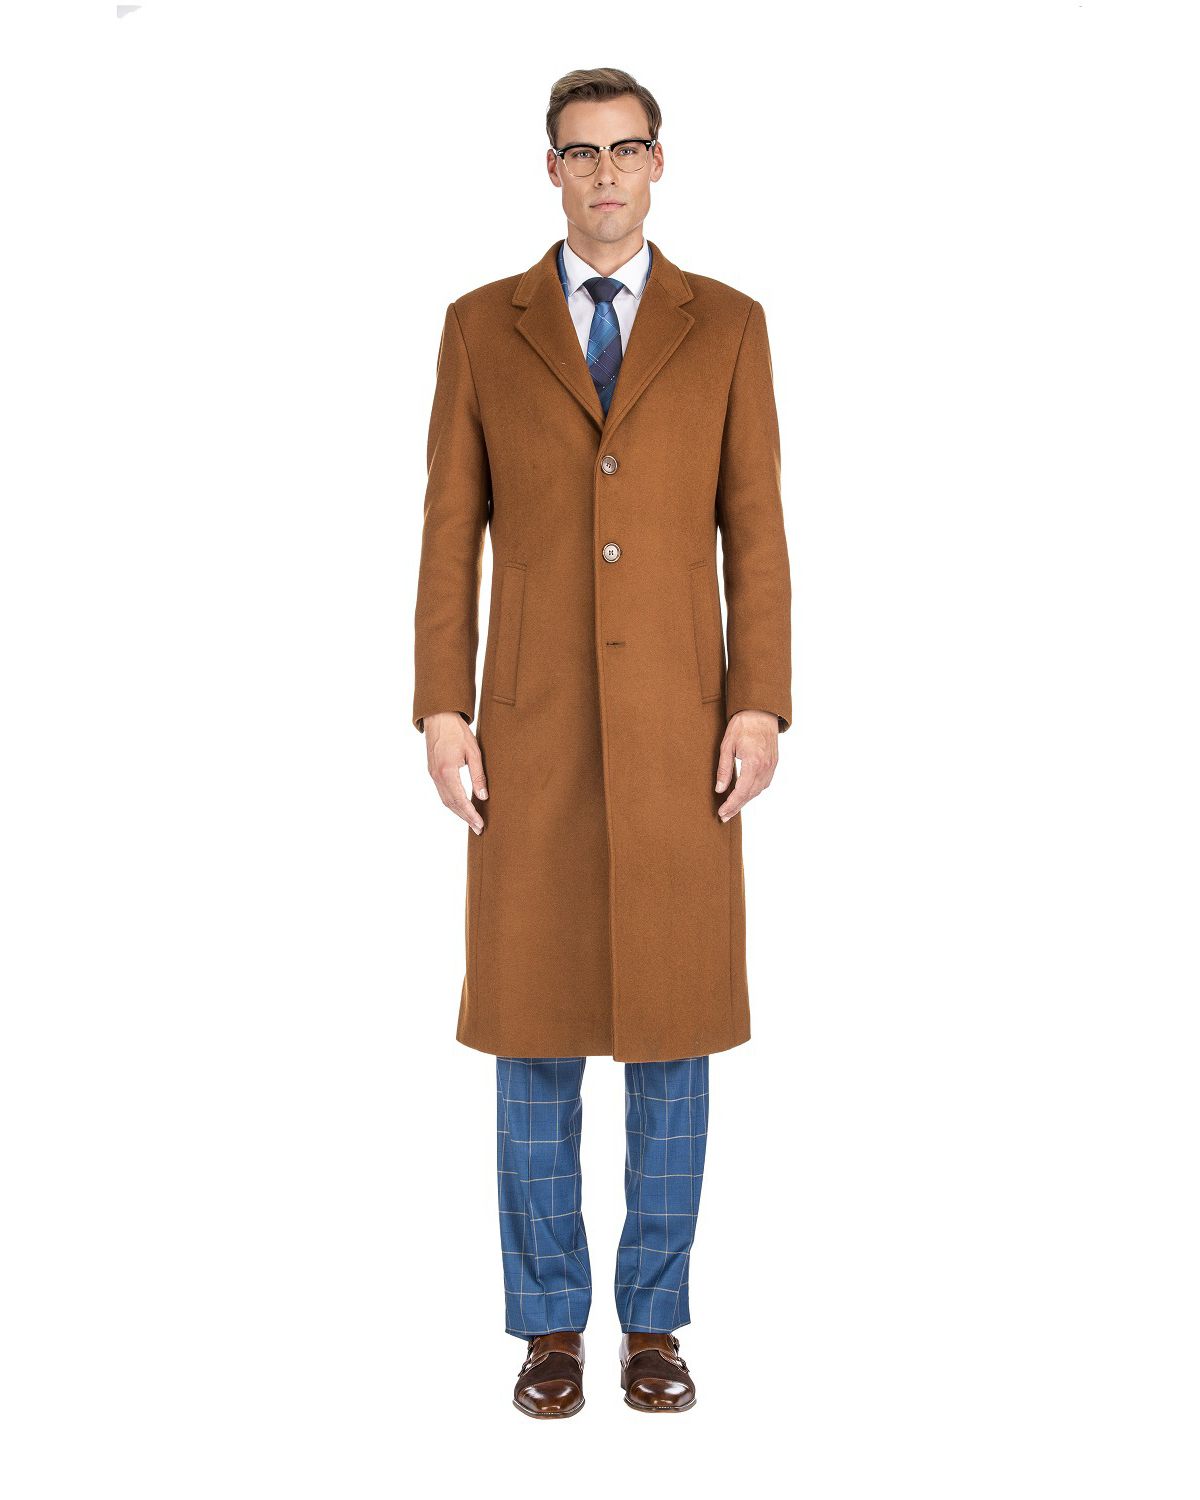 Men's Knee Length Wool Blend Three Button Long Jacket Overcoat Top Coat Braveman